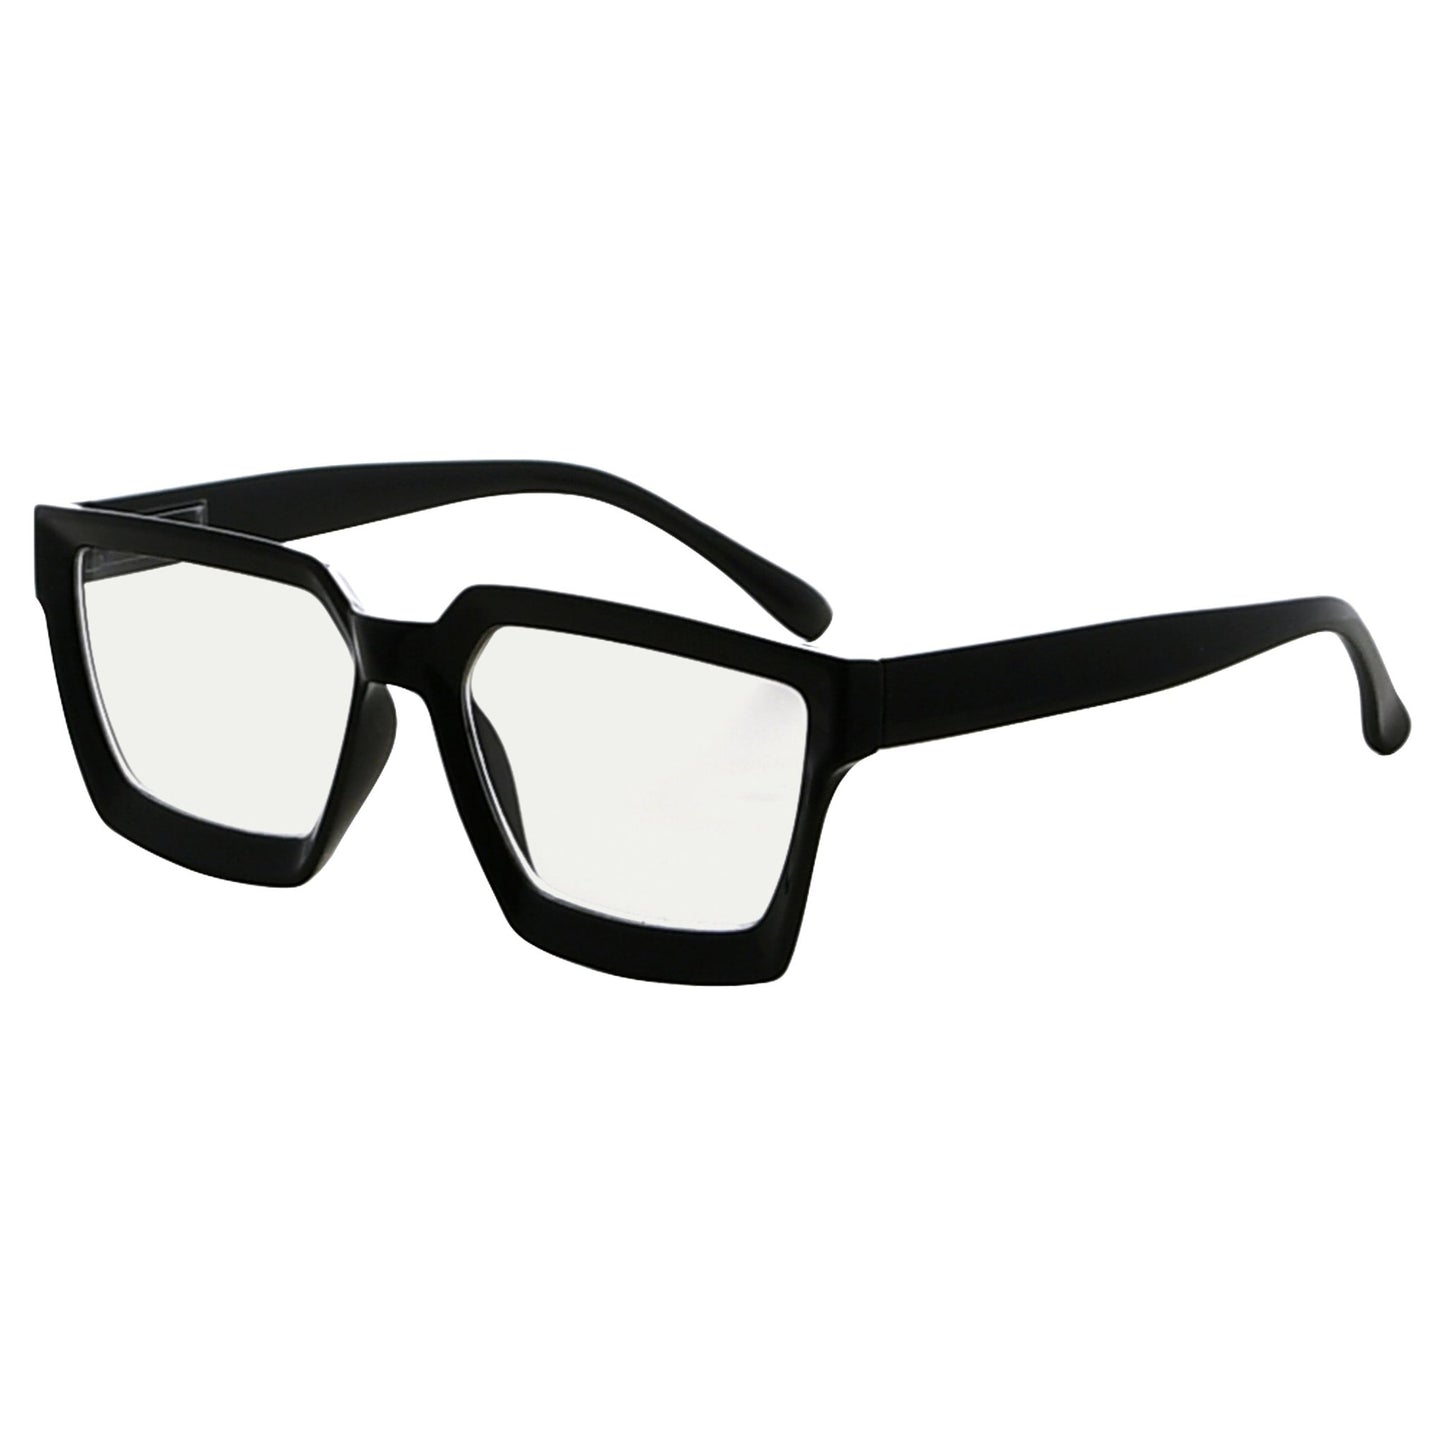 Progressive Reading Glasses Black M2003